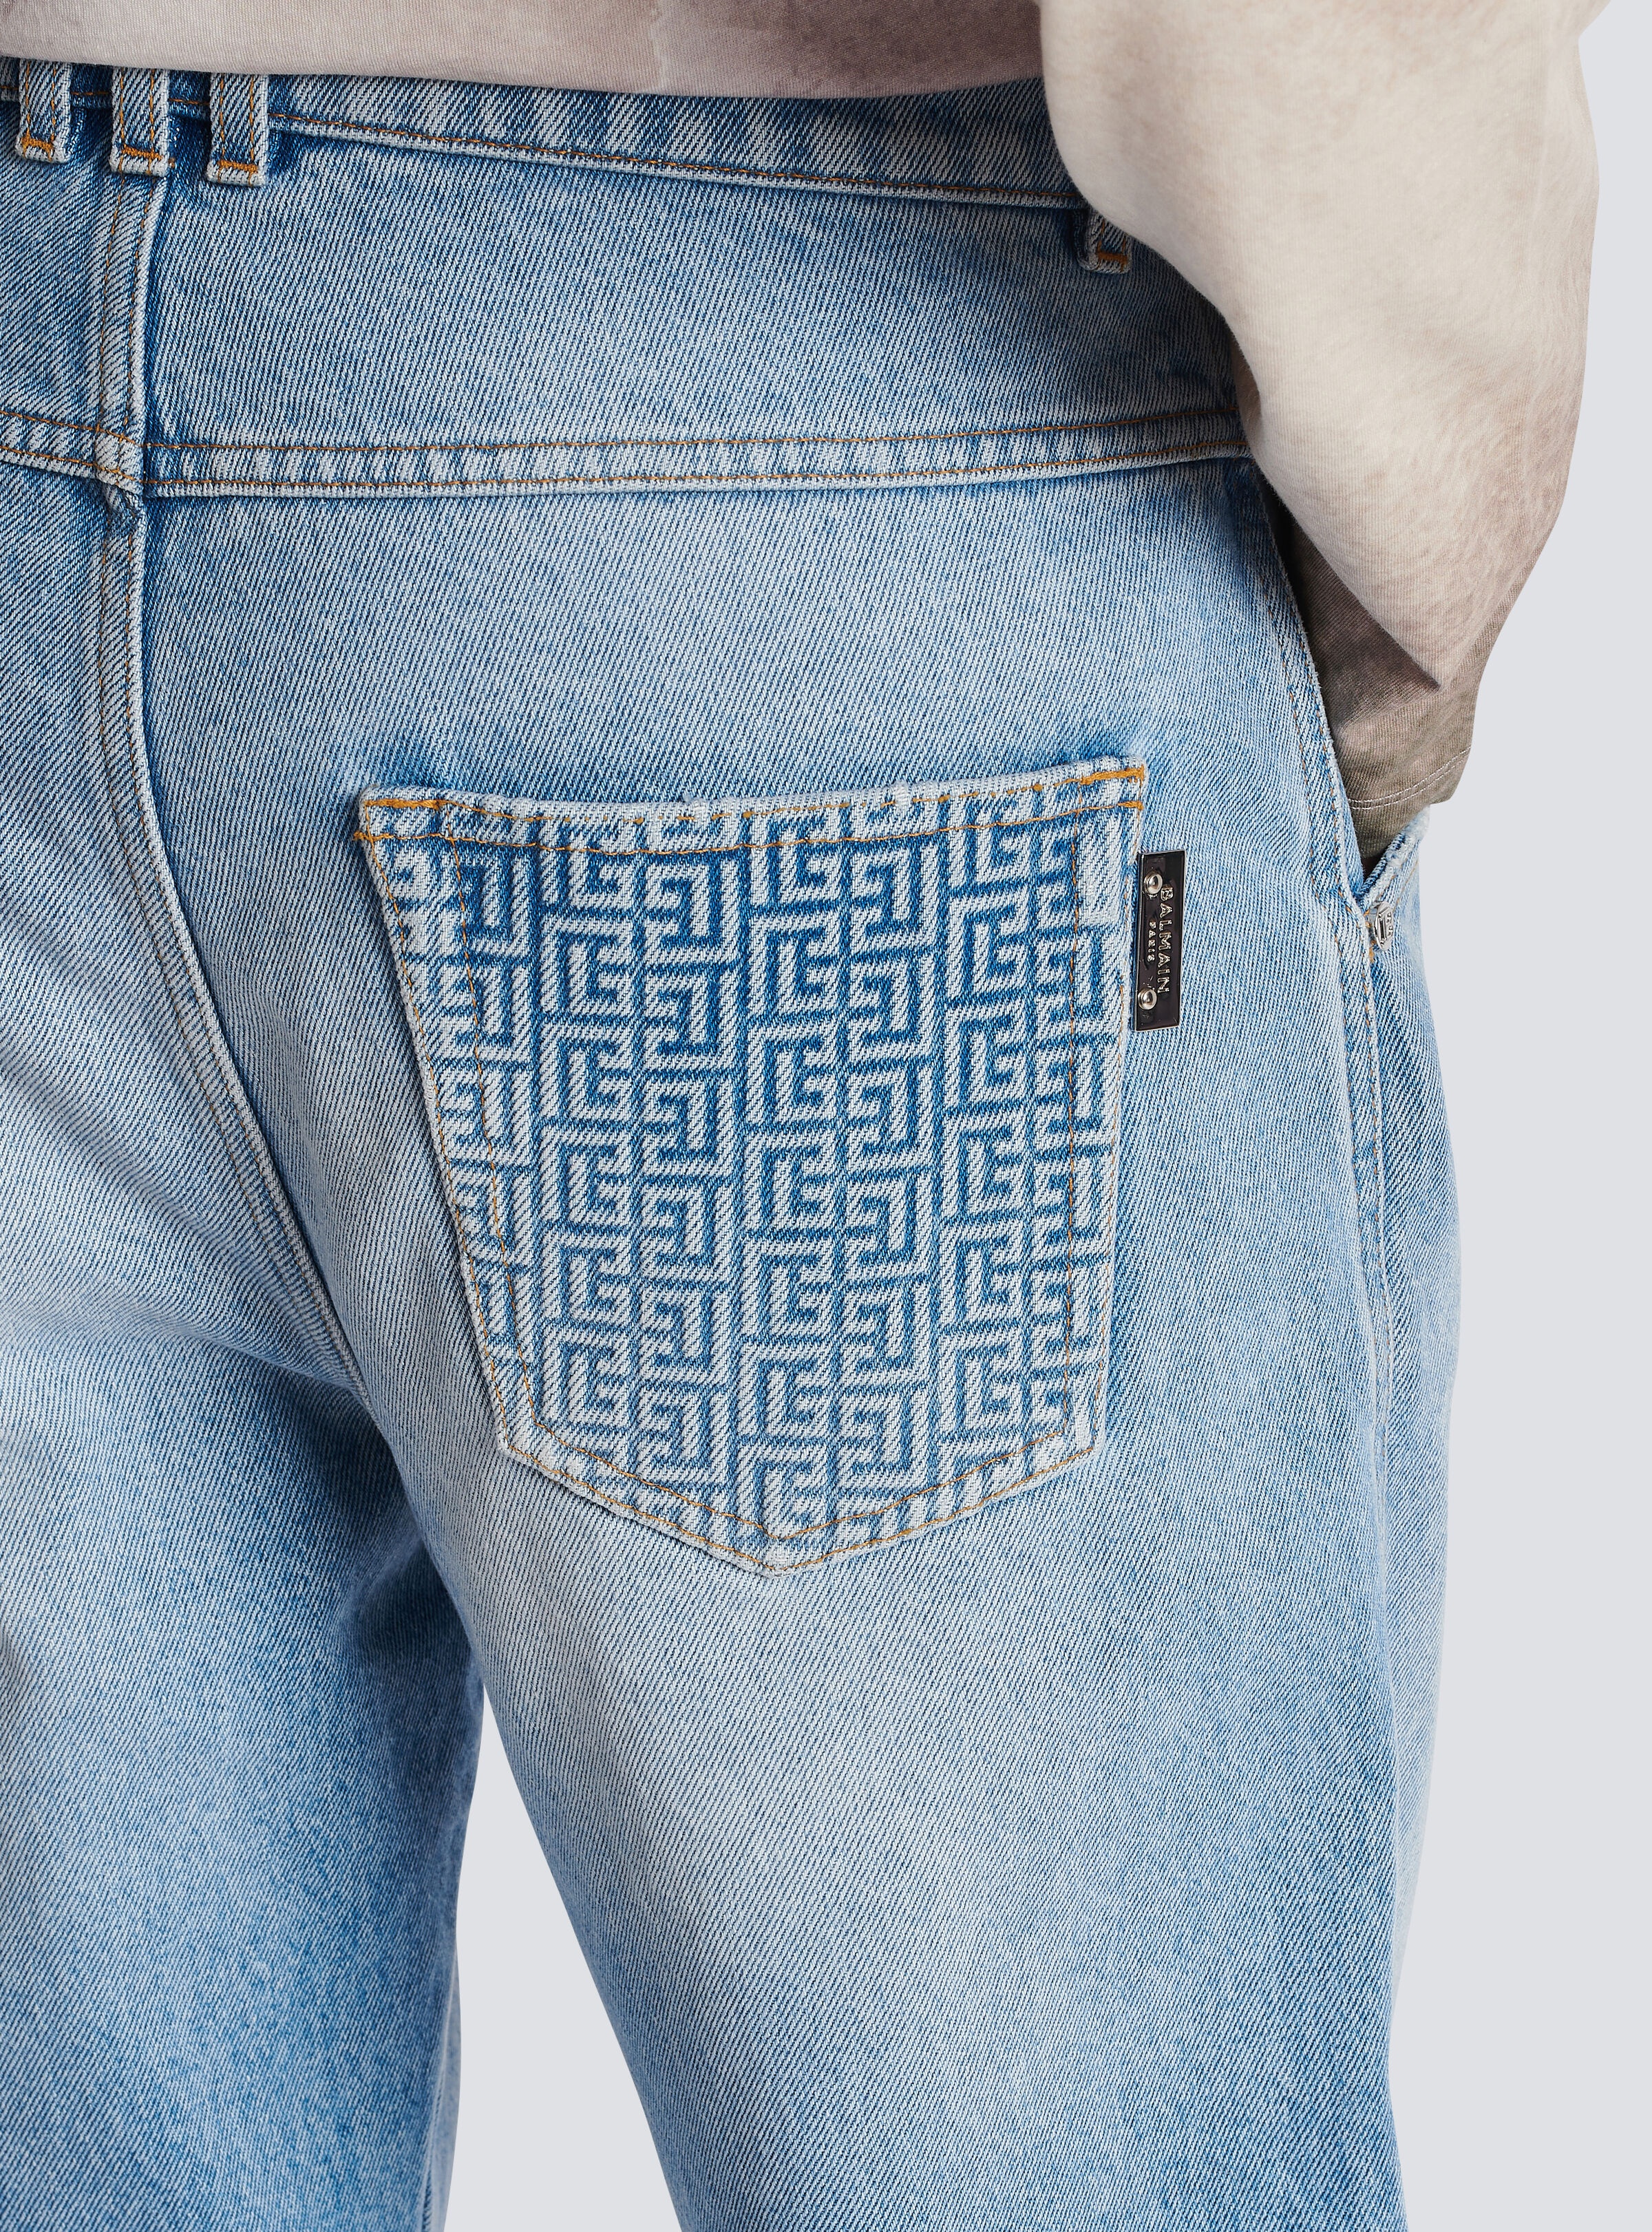 Straight cut cotton jeans - 7